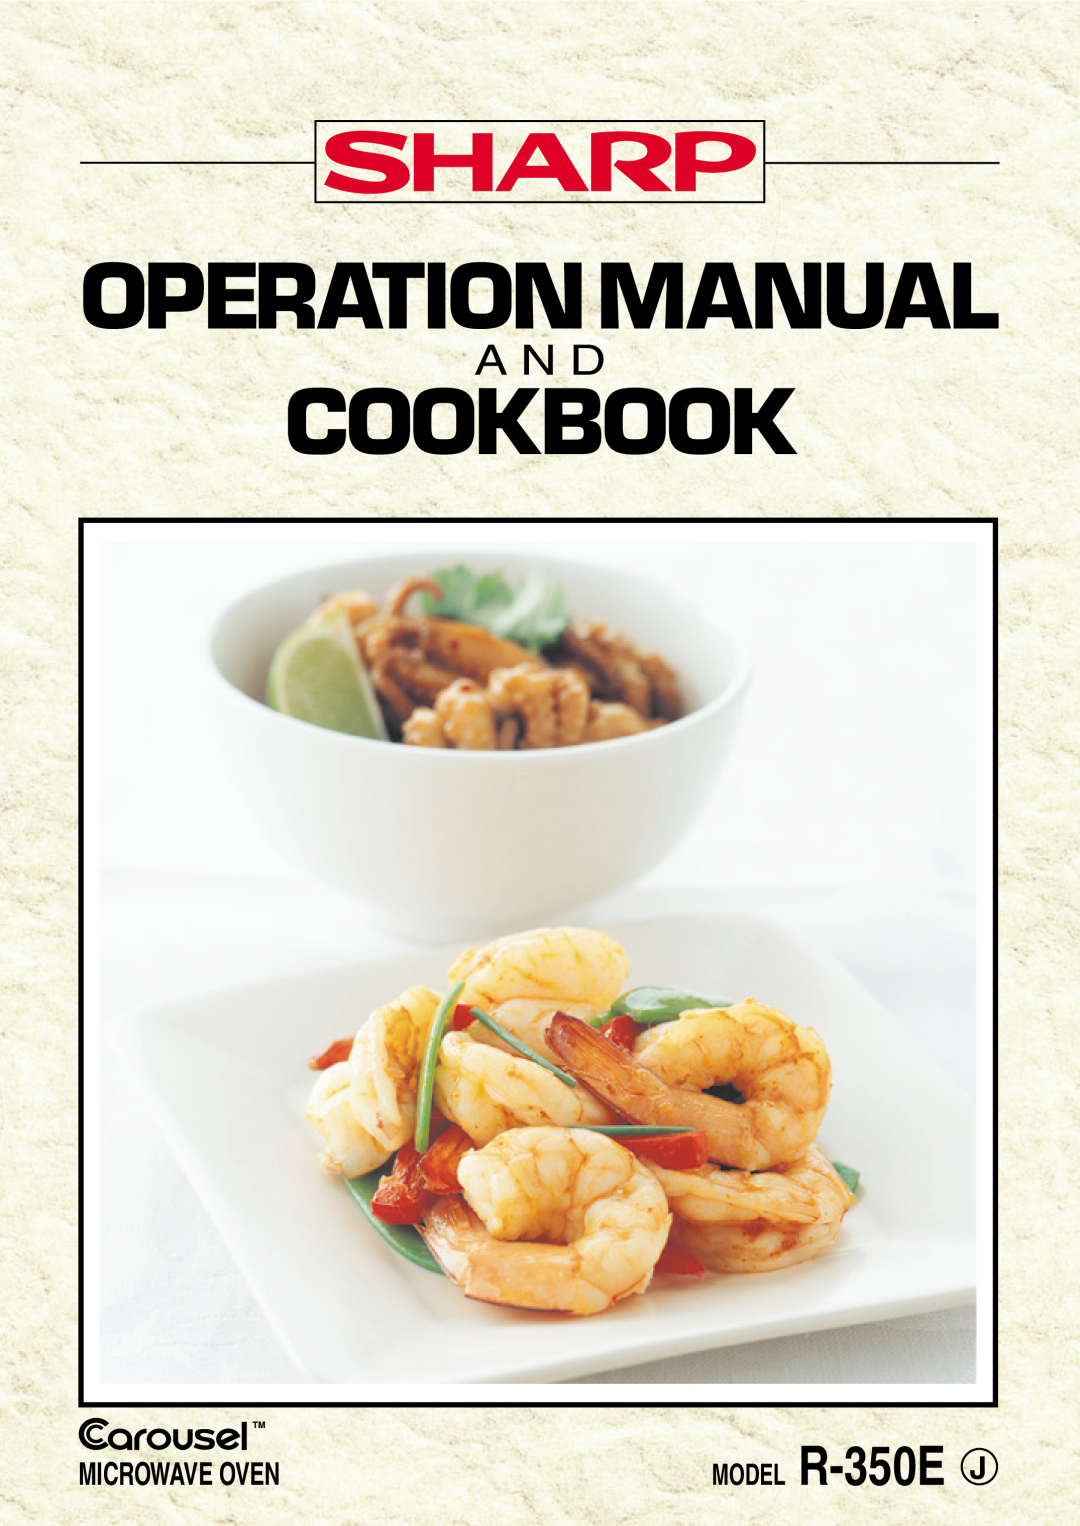 Sharp operation manual Operationmanual, Cookbook, MODEL R-350E J, A N D, Microwave Oven 